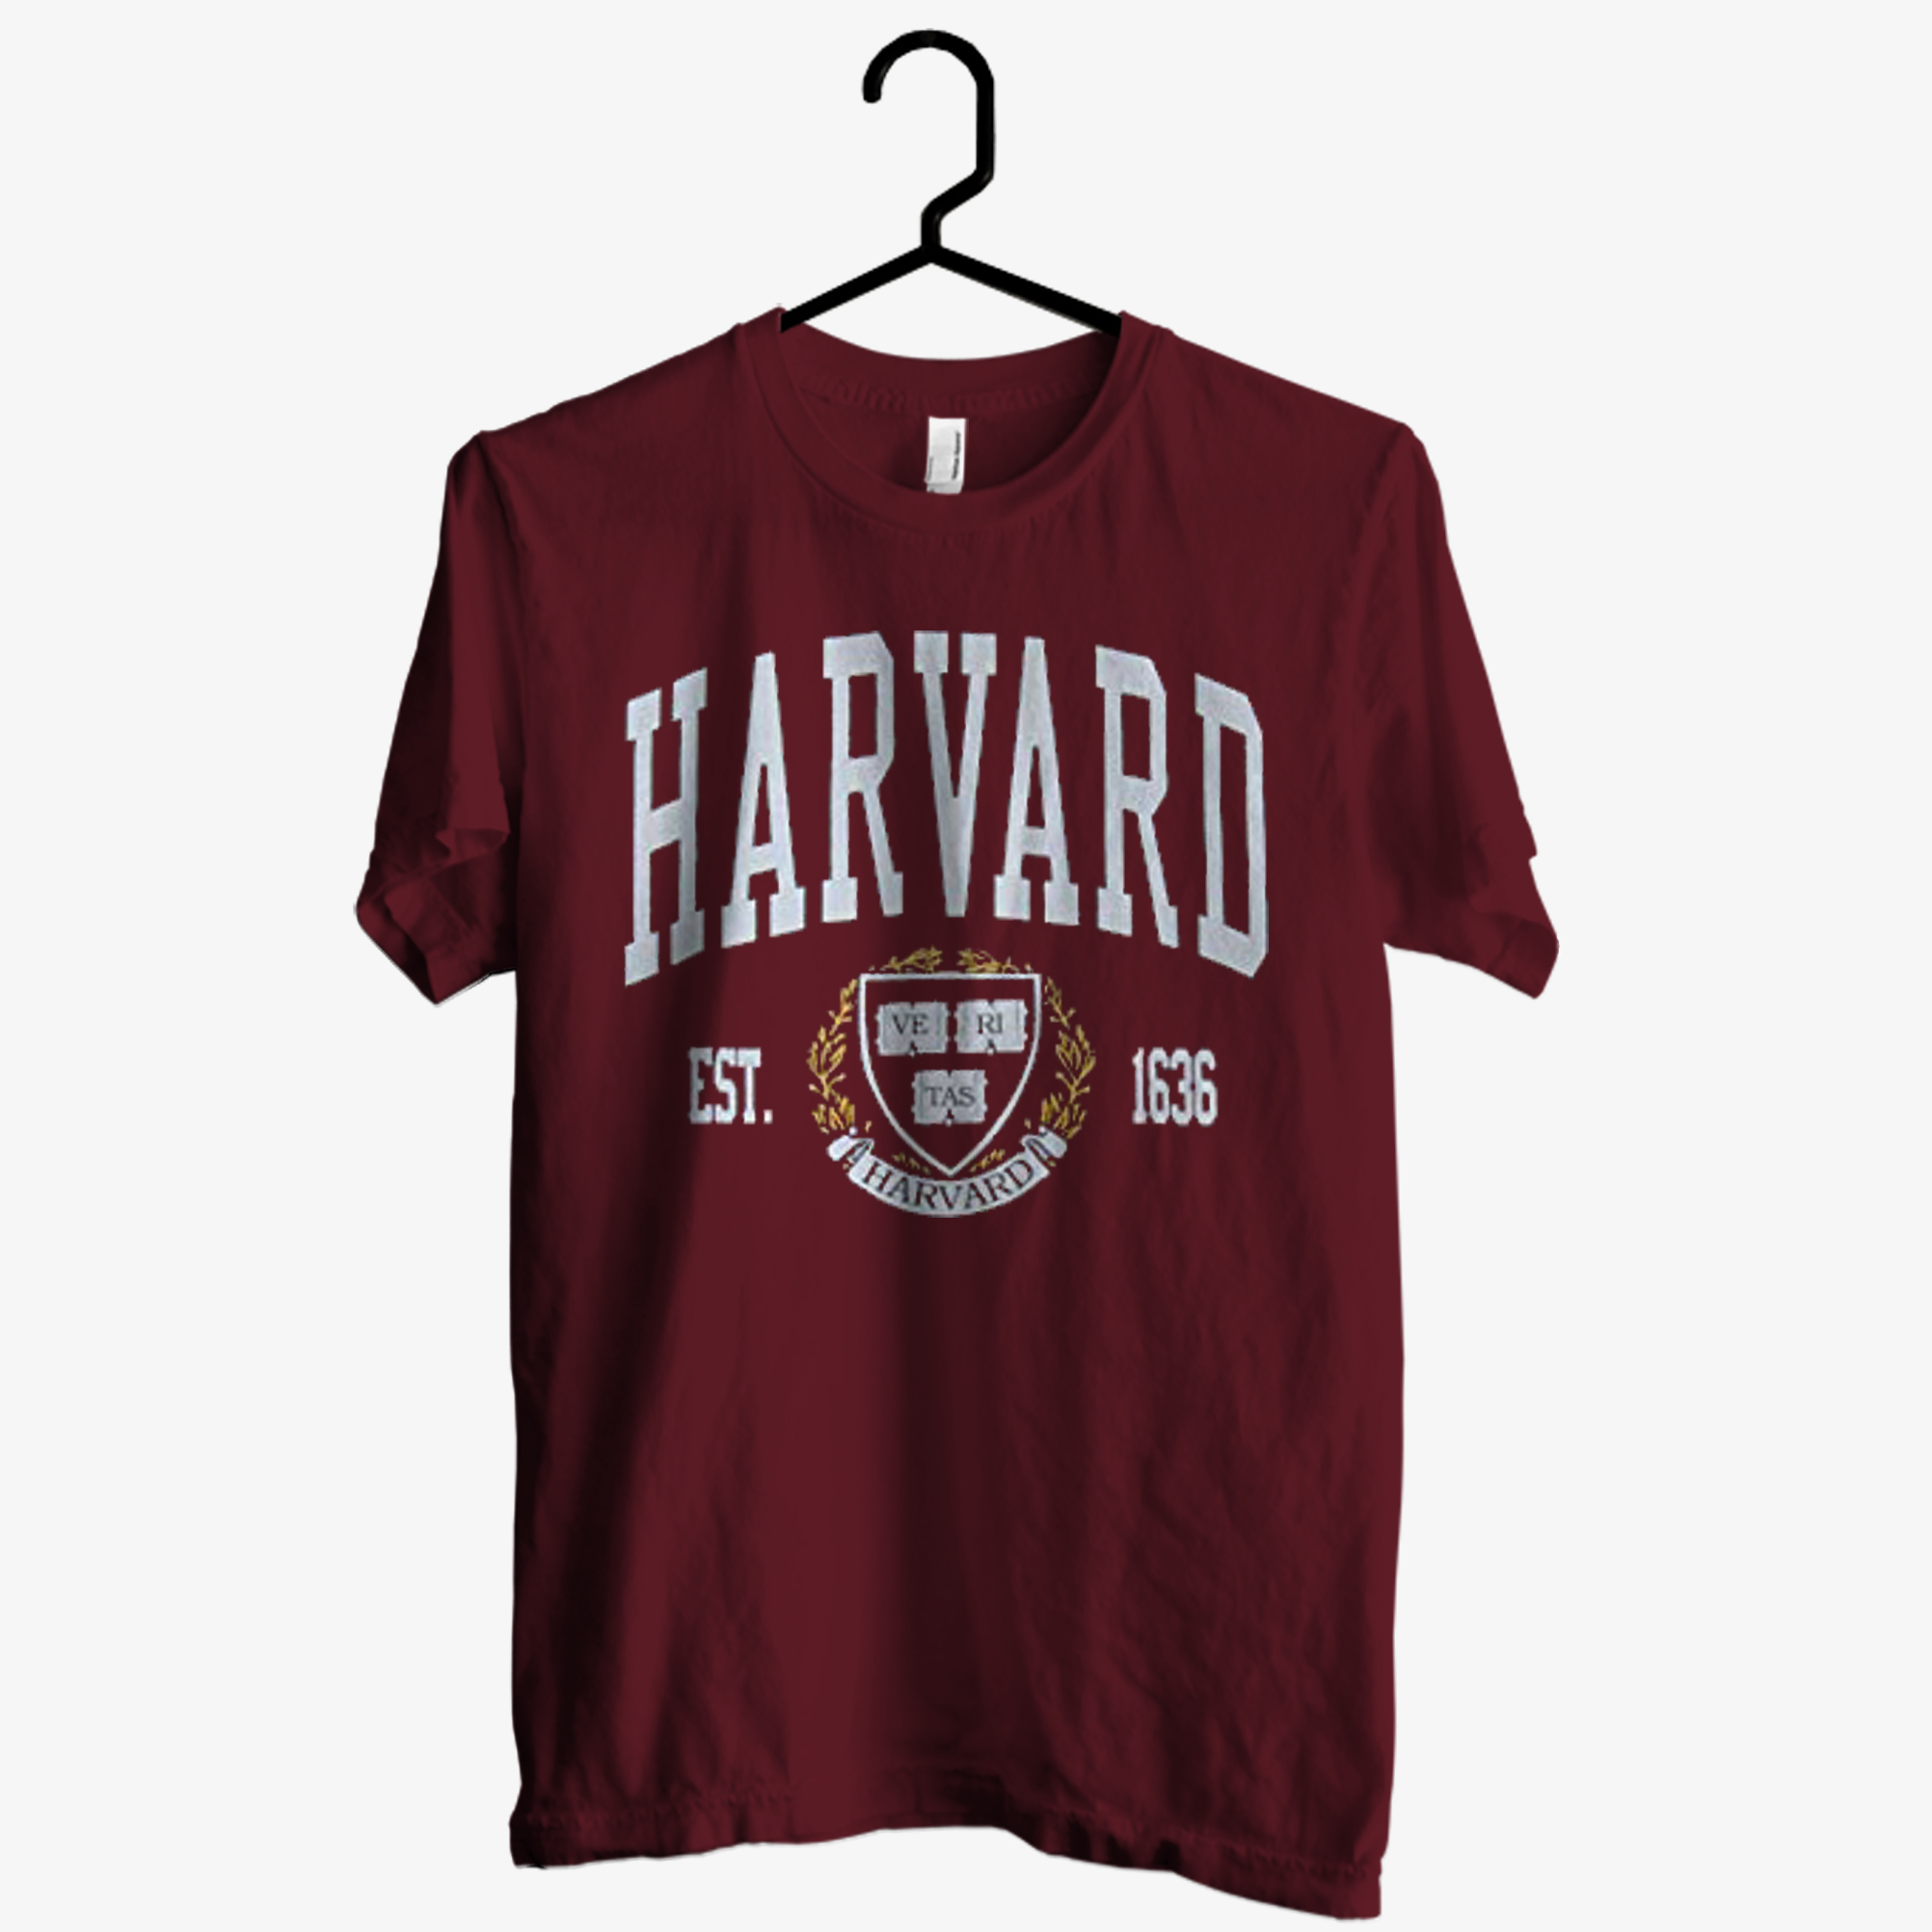 Harvard Est. 1636 T shirt